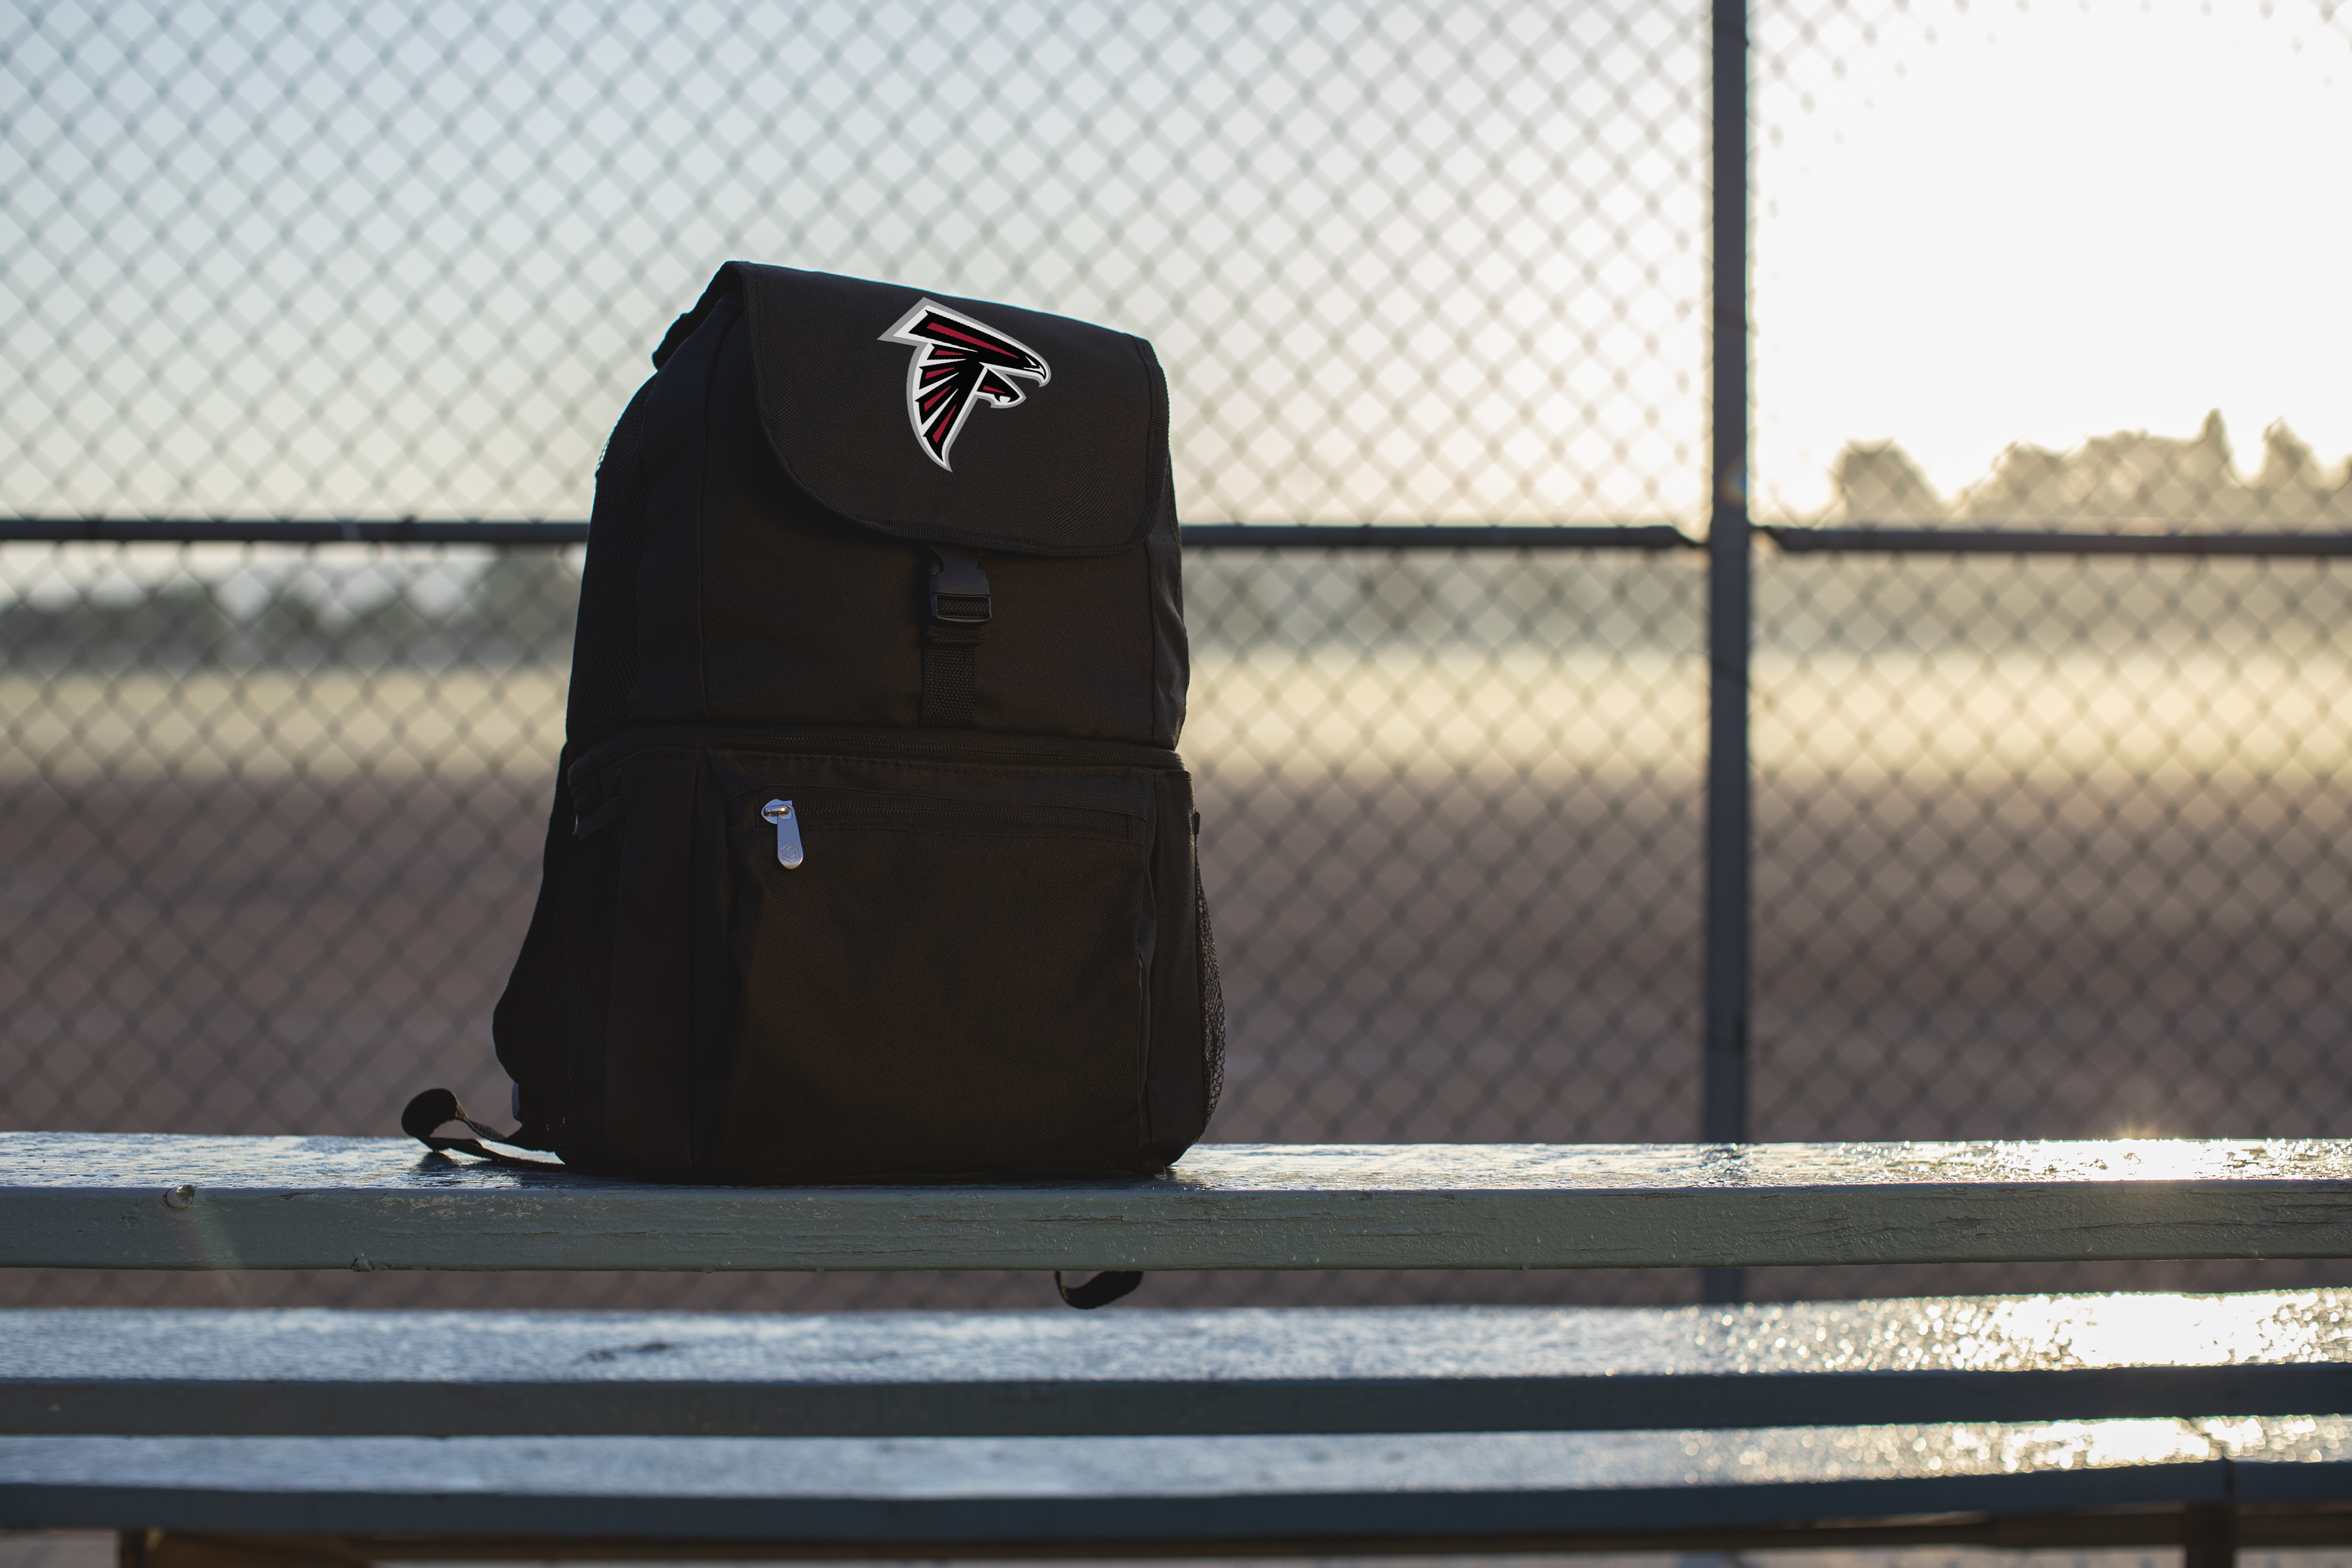 Atlanta Falcons - Zuma Backpack Cooler